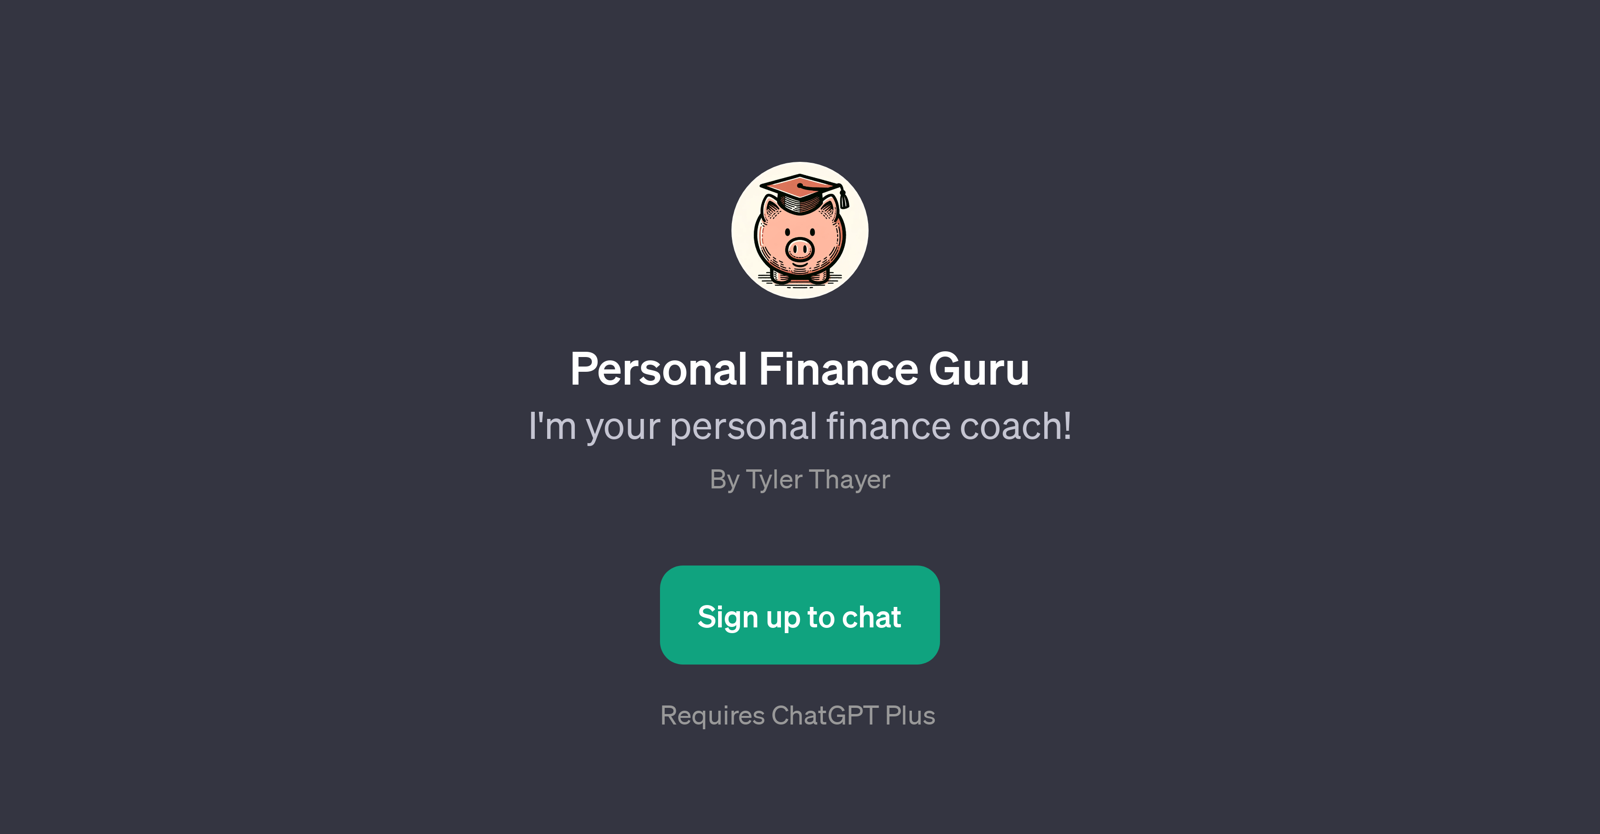 Personal Finance Guru website